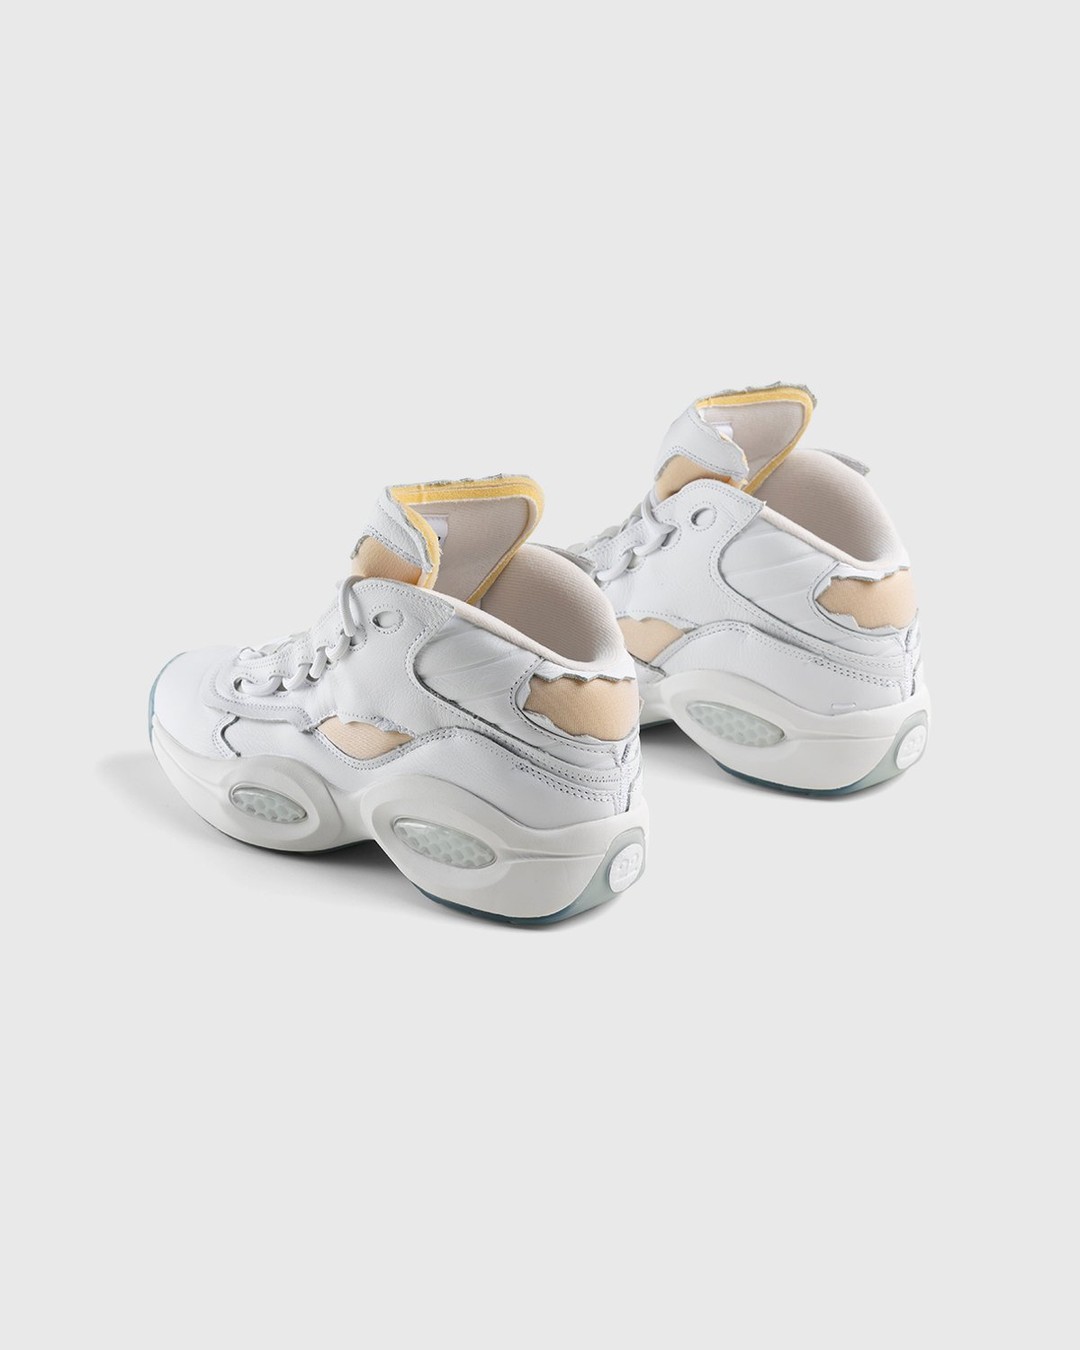 Reebok x Maison Margiela – Question Mid Memory Of White - Sneakers - White - Image 3